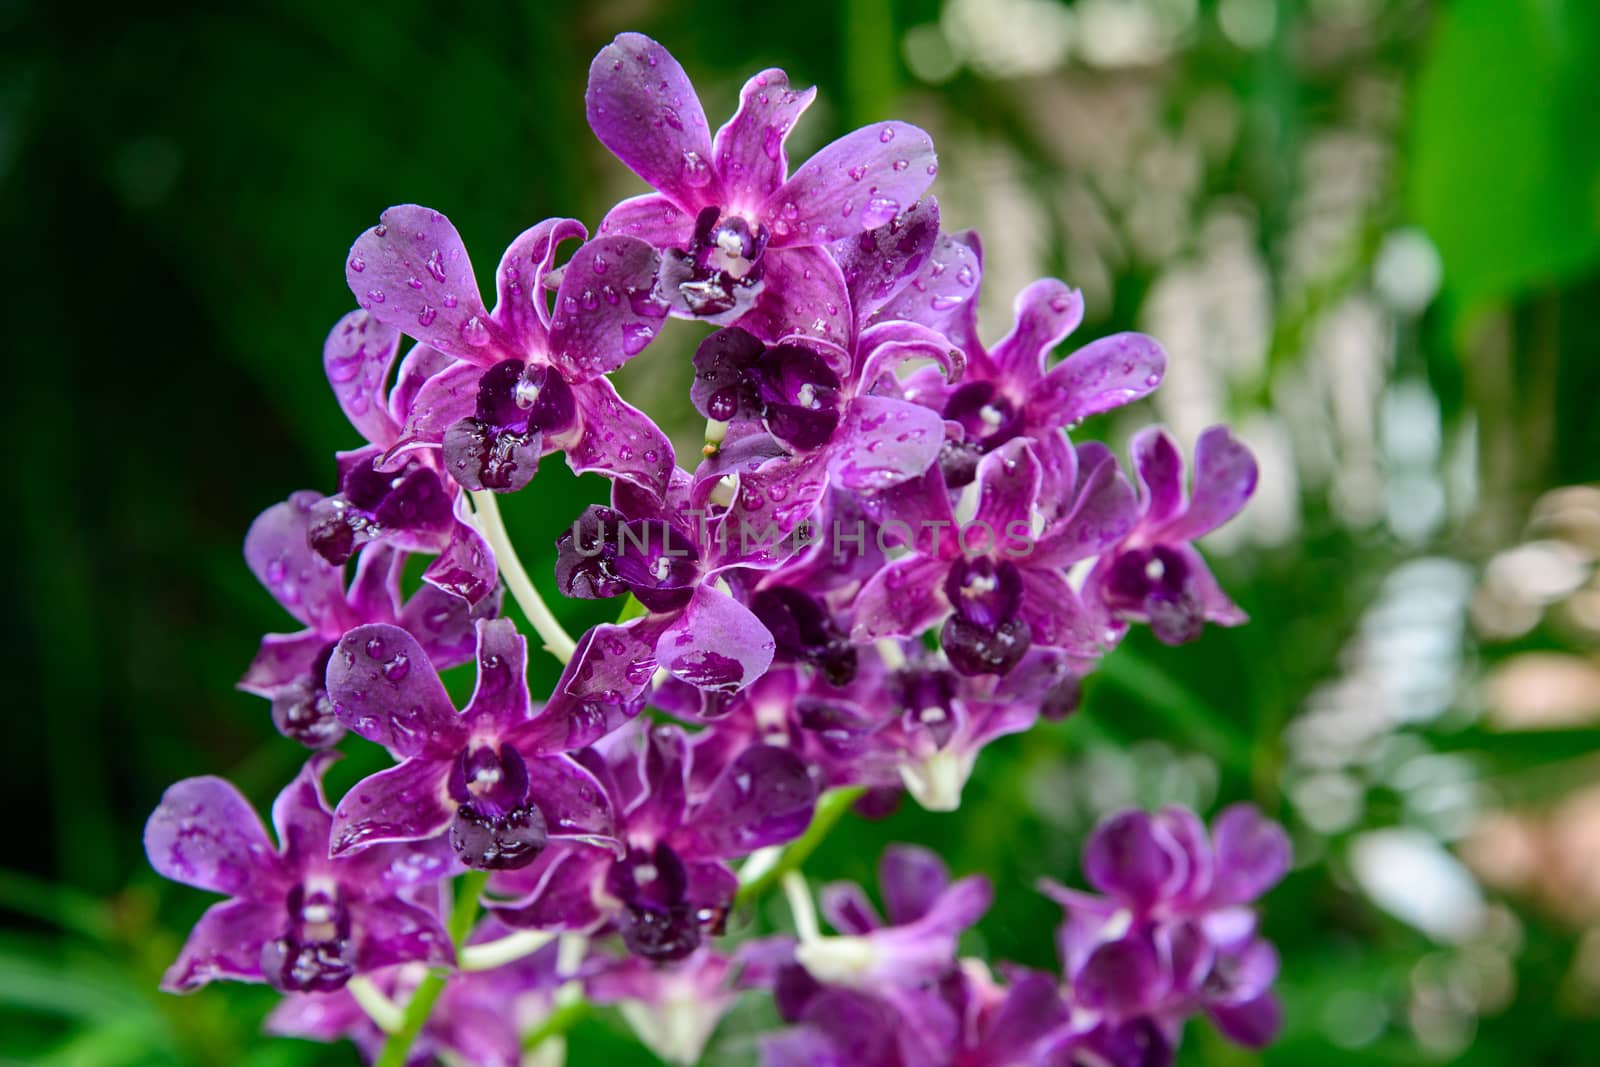 Rhynchostylis gigantea var purple orchids , Genus is Rhynchostyl by jakgree